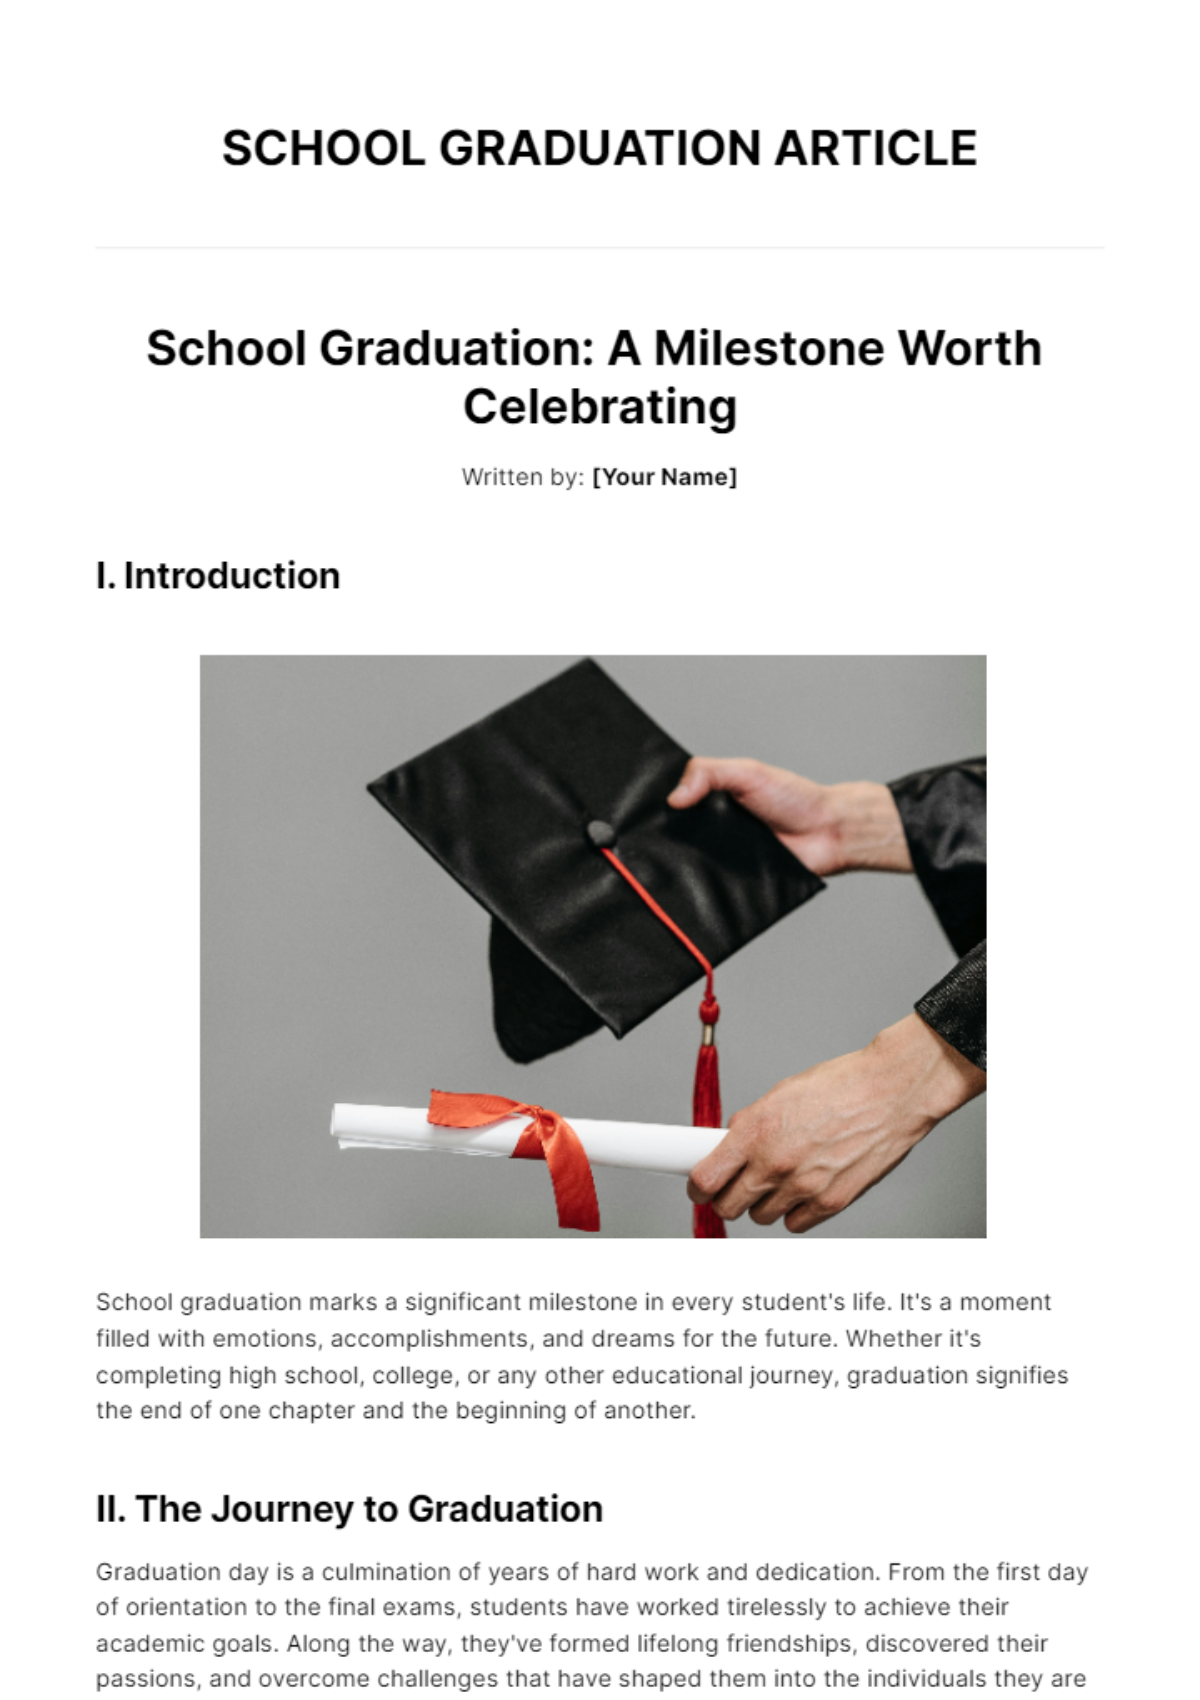 Free School Graduation Article Template